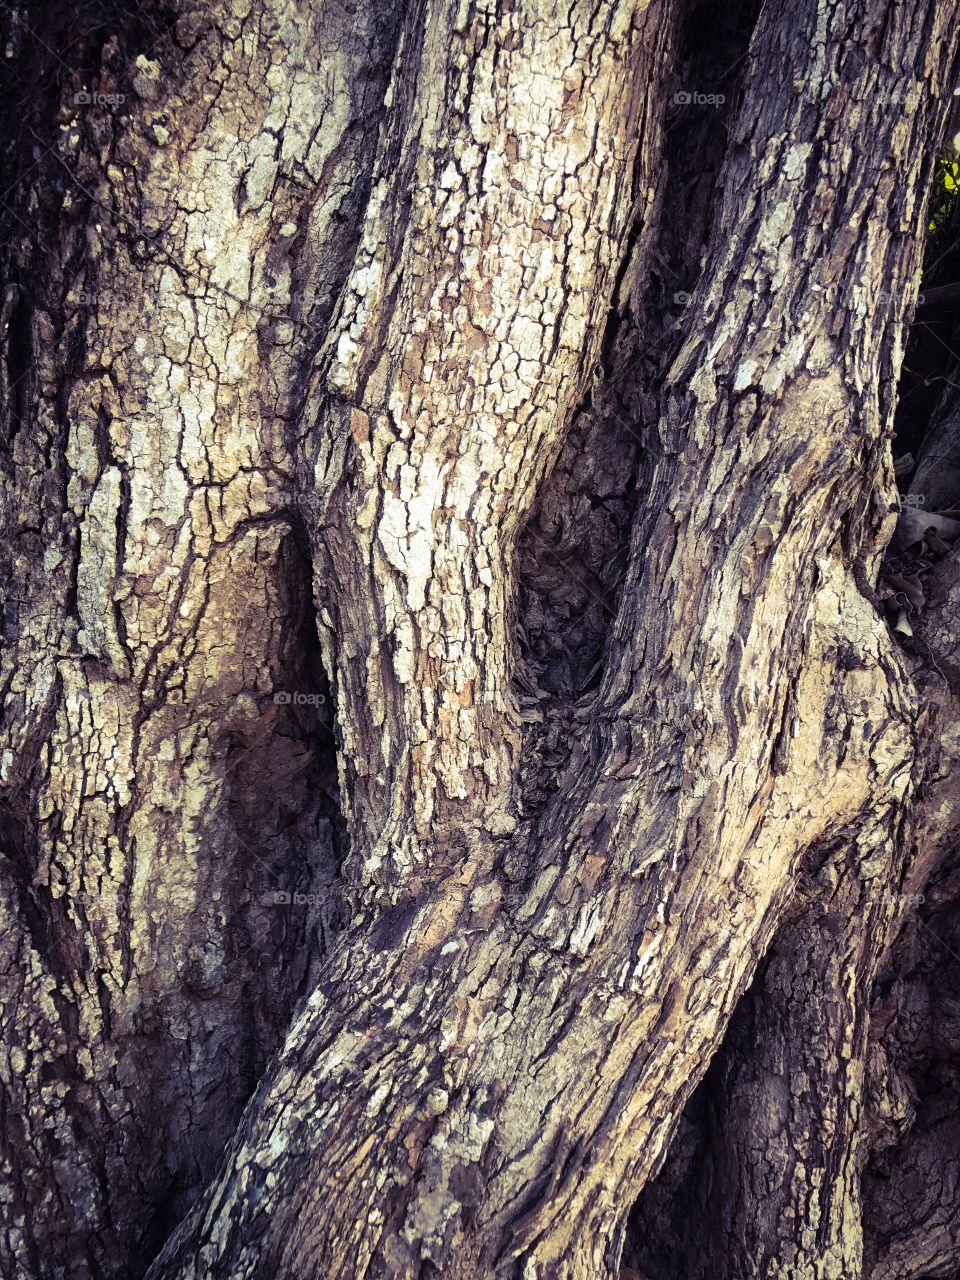 Big tree with bark texture